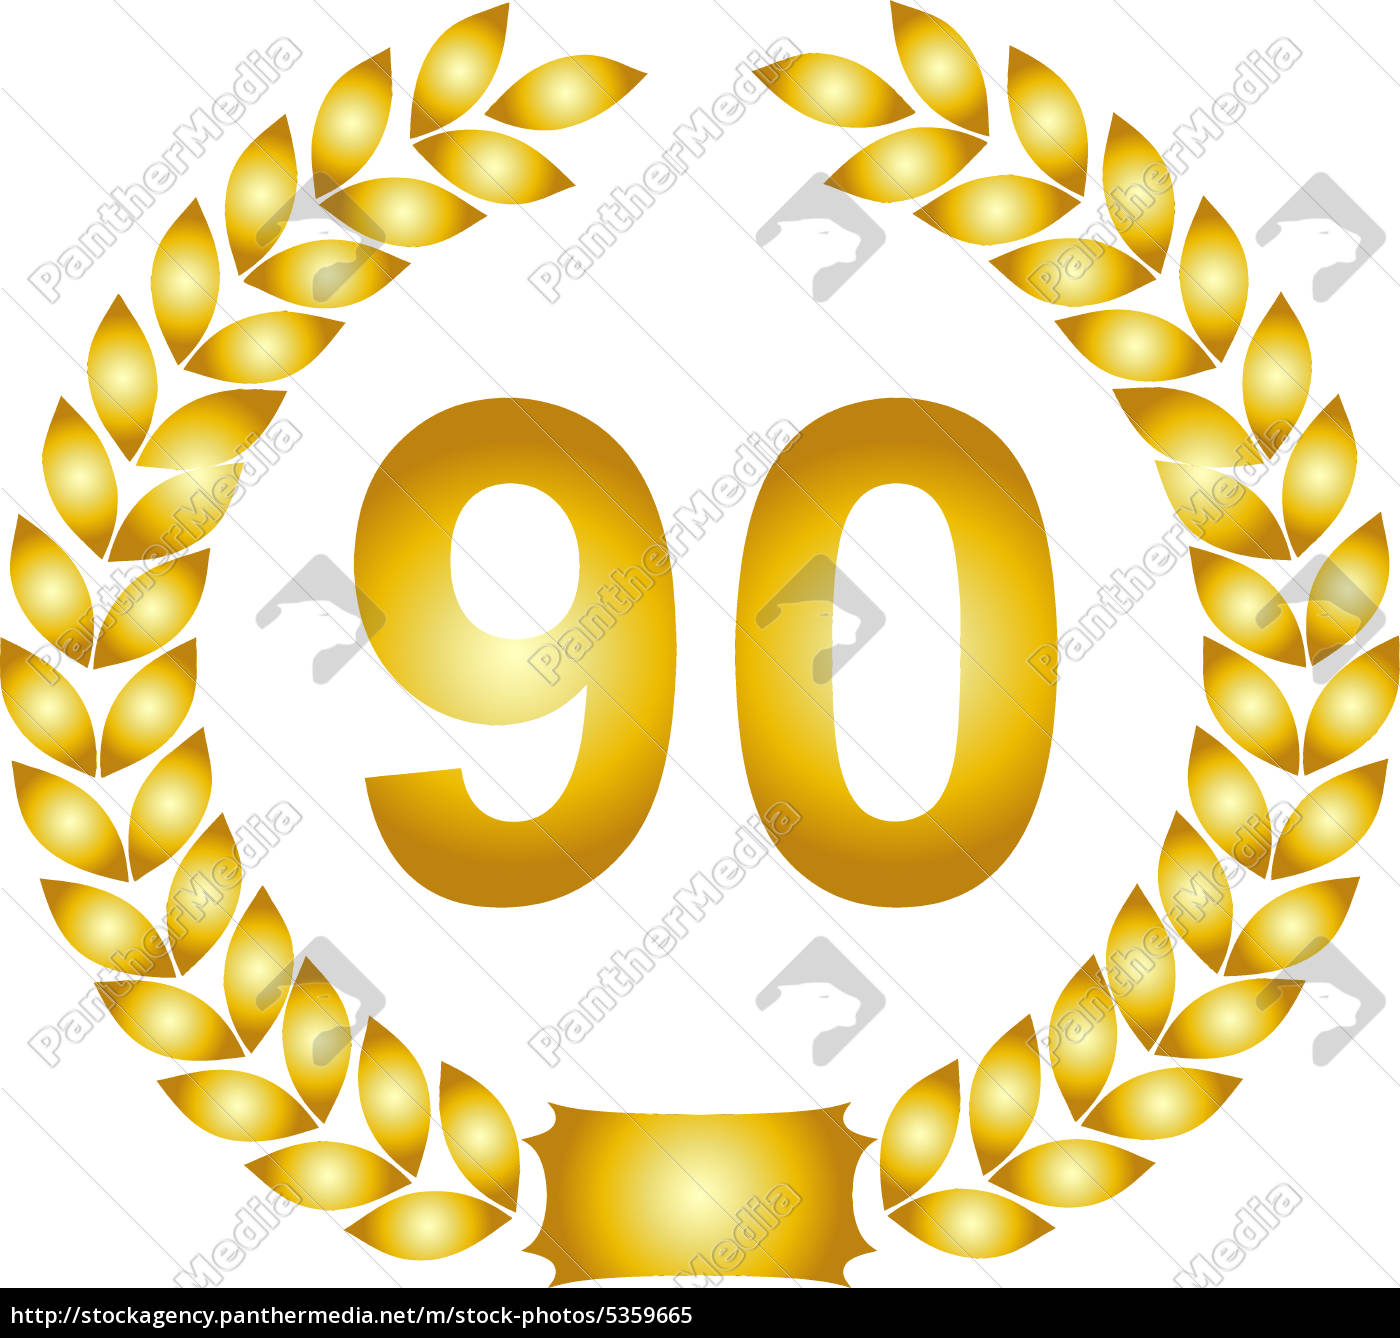 golden laurel wreath 90 years - Royalty free image #5359665